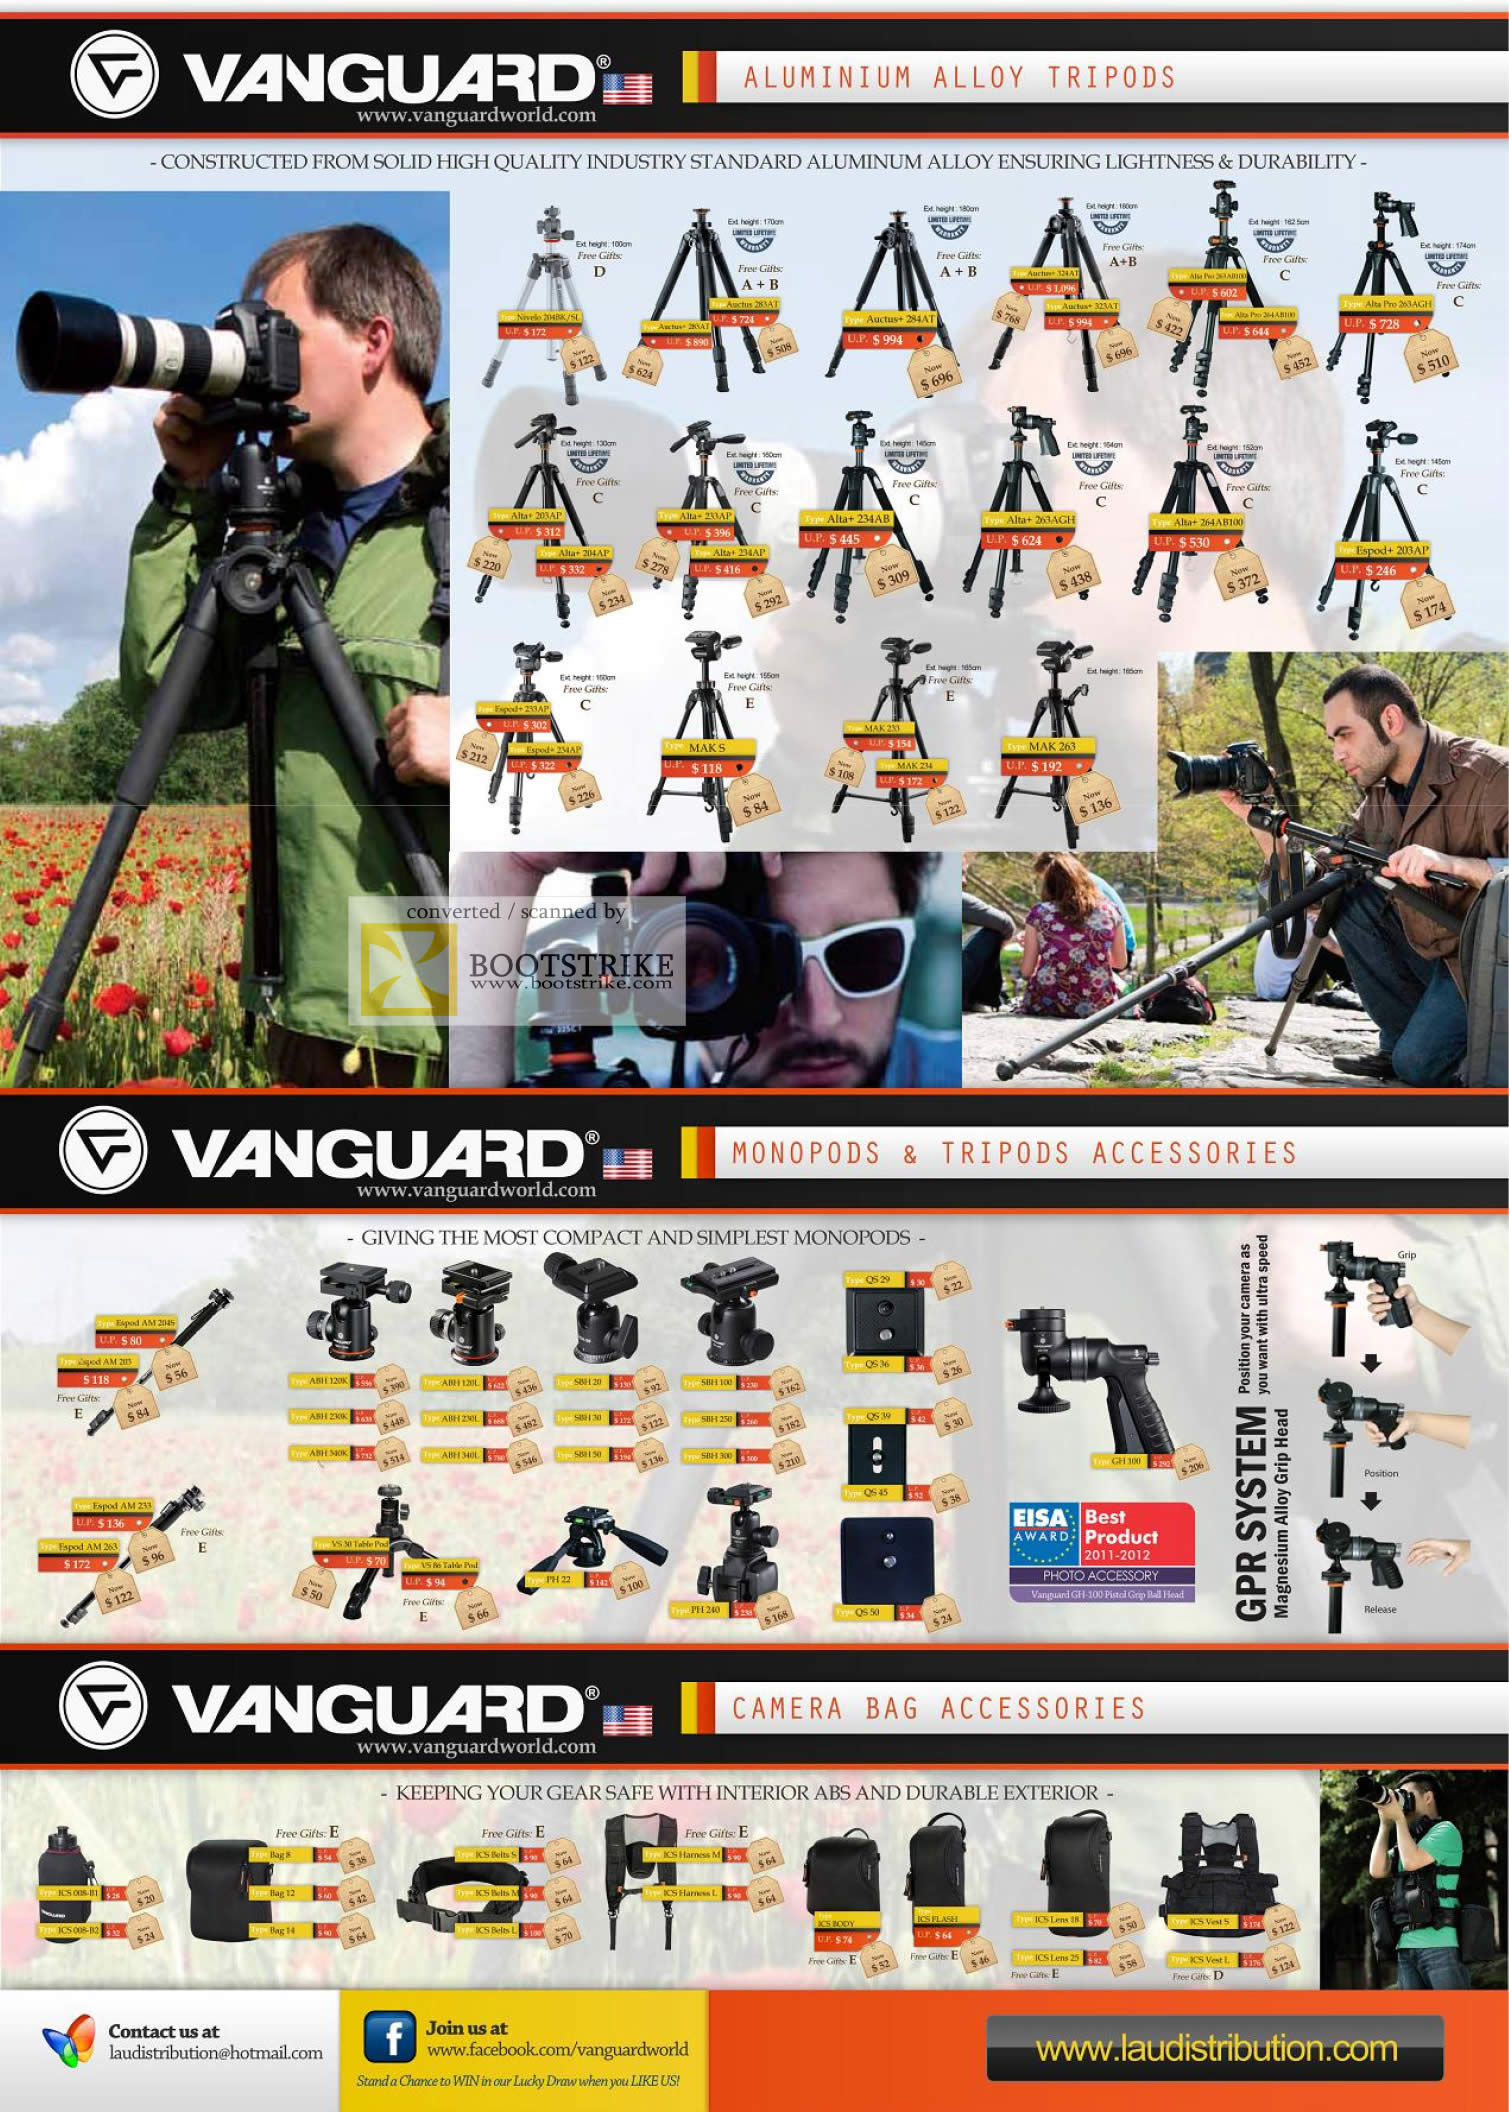 COMEX 2011 price list image brochure of Lau Intl Vanguard Aluminium Alloy Tripods Monopods Accessories Camera Bag